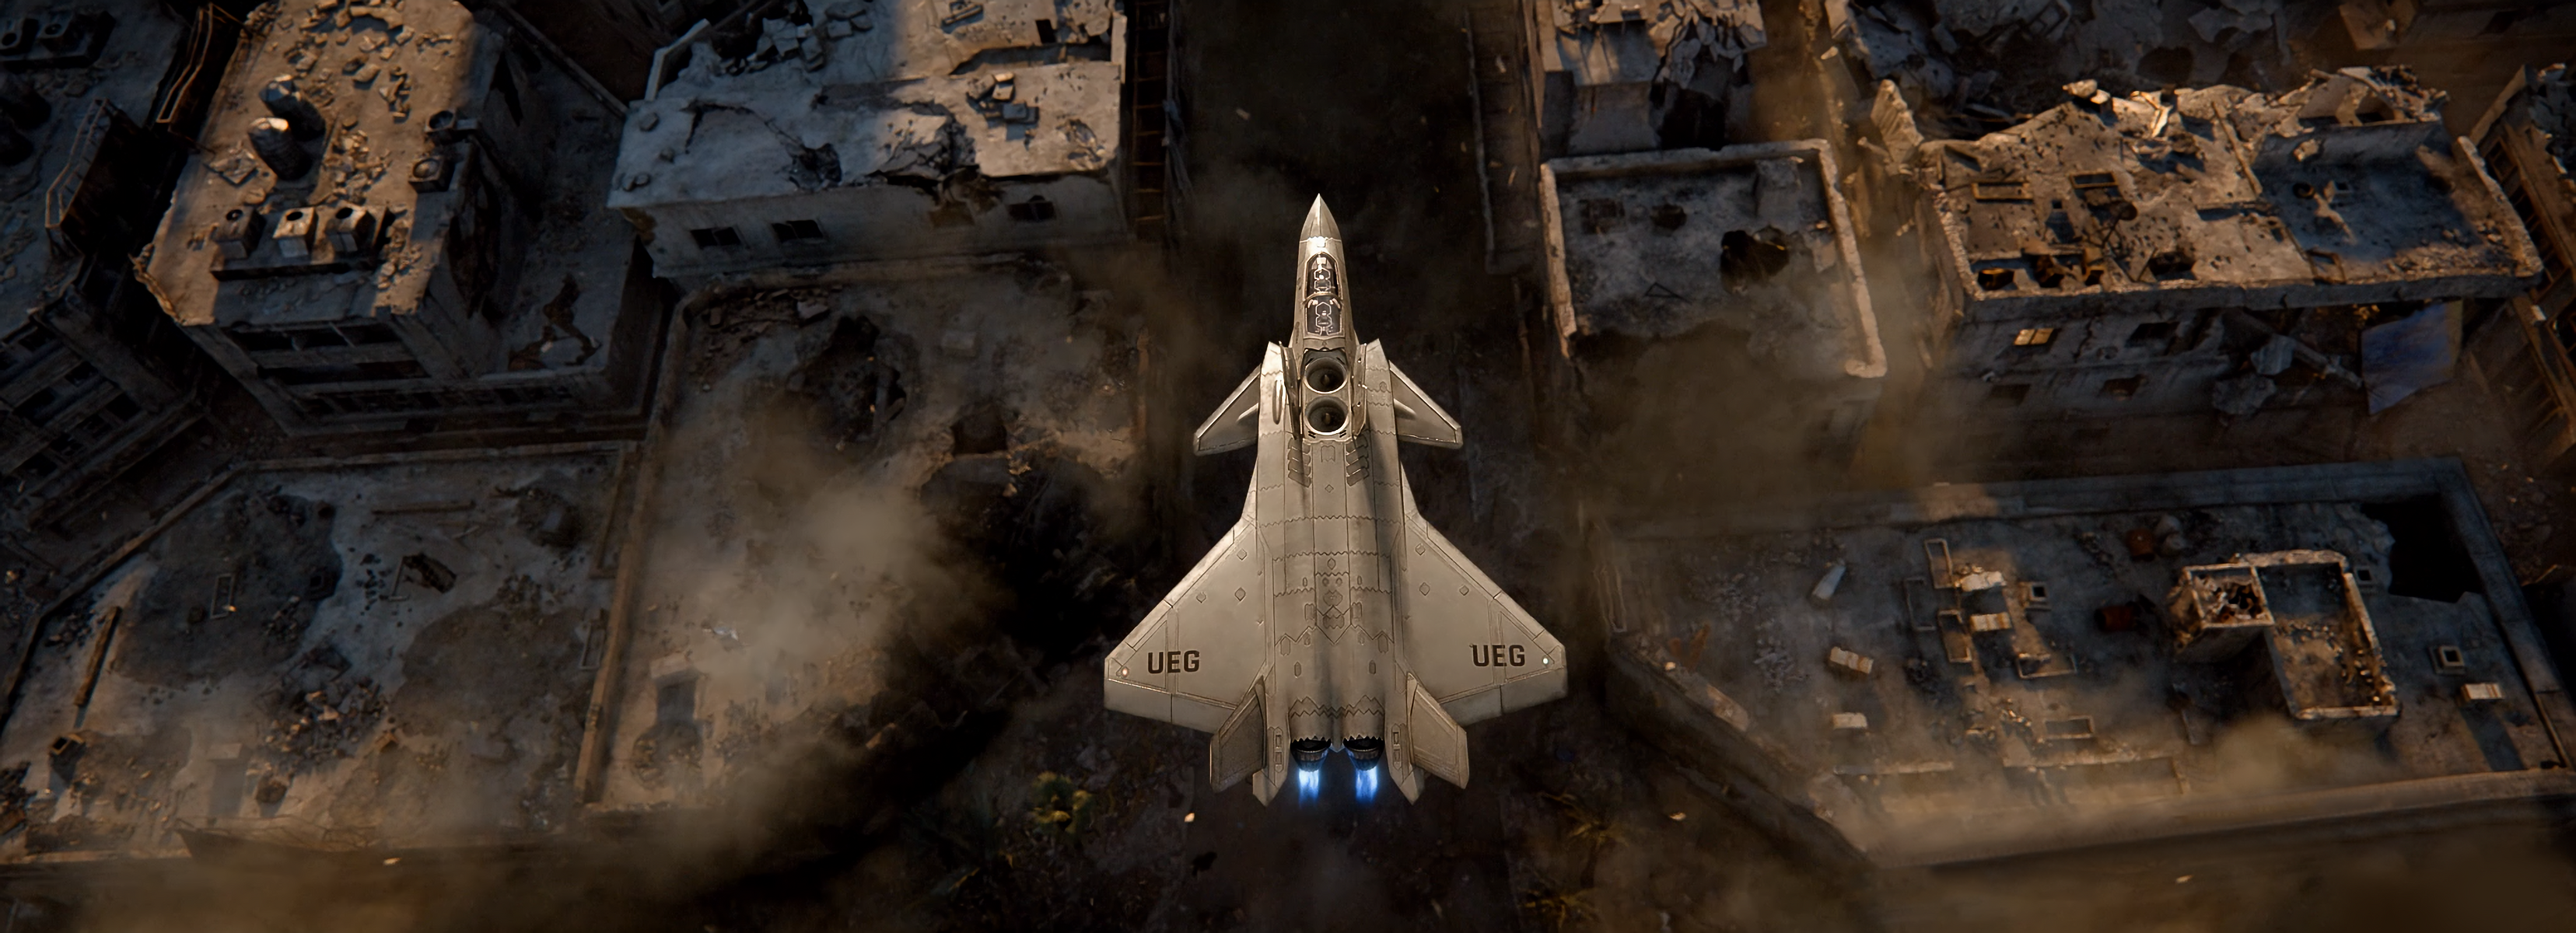 General 3312x1200 The Wandering Earth 2 science fiction film stills aircraft destruction